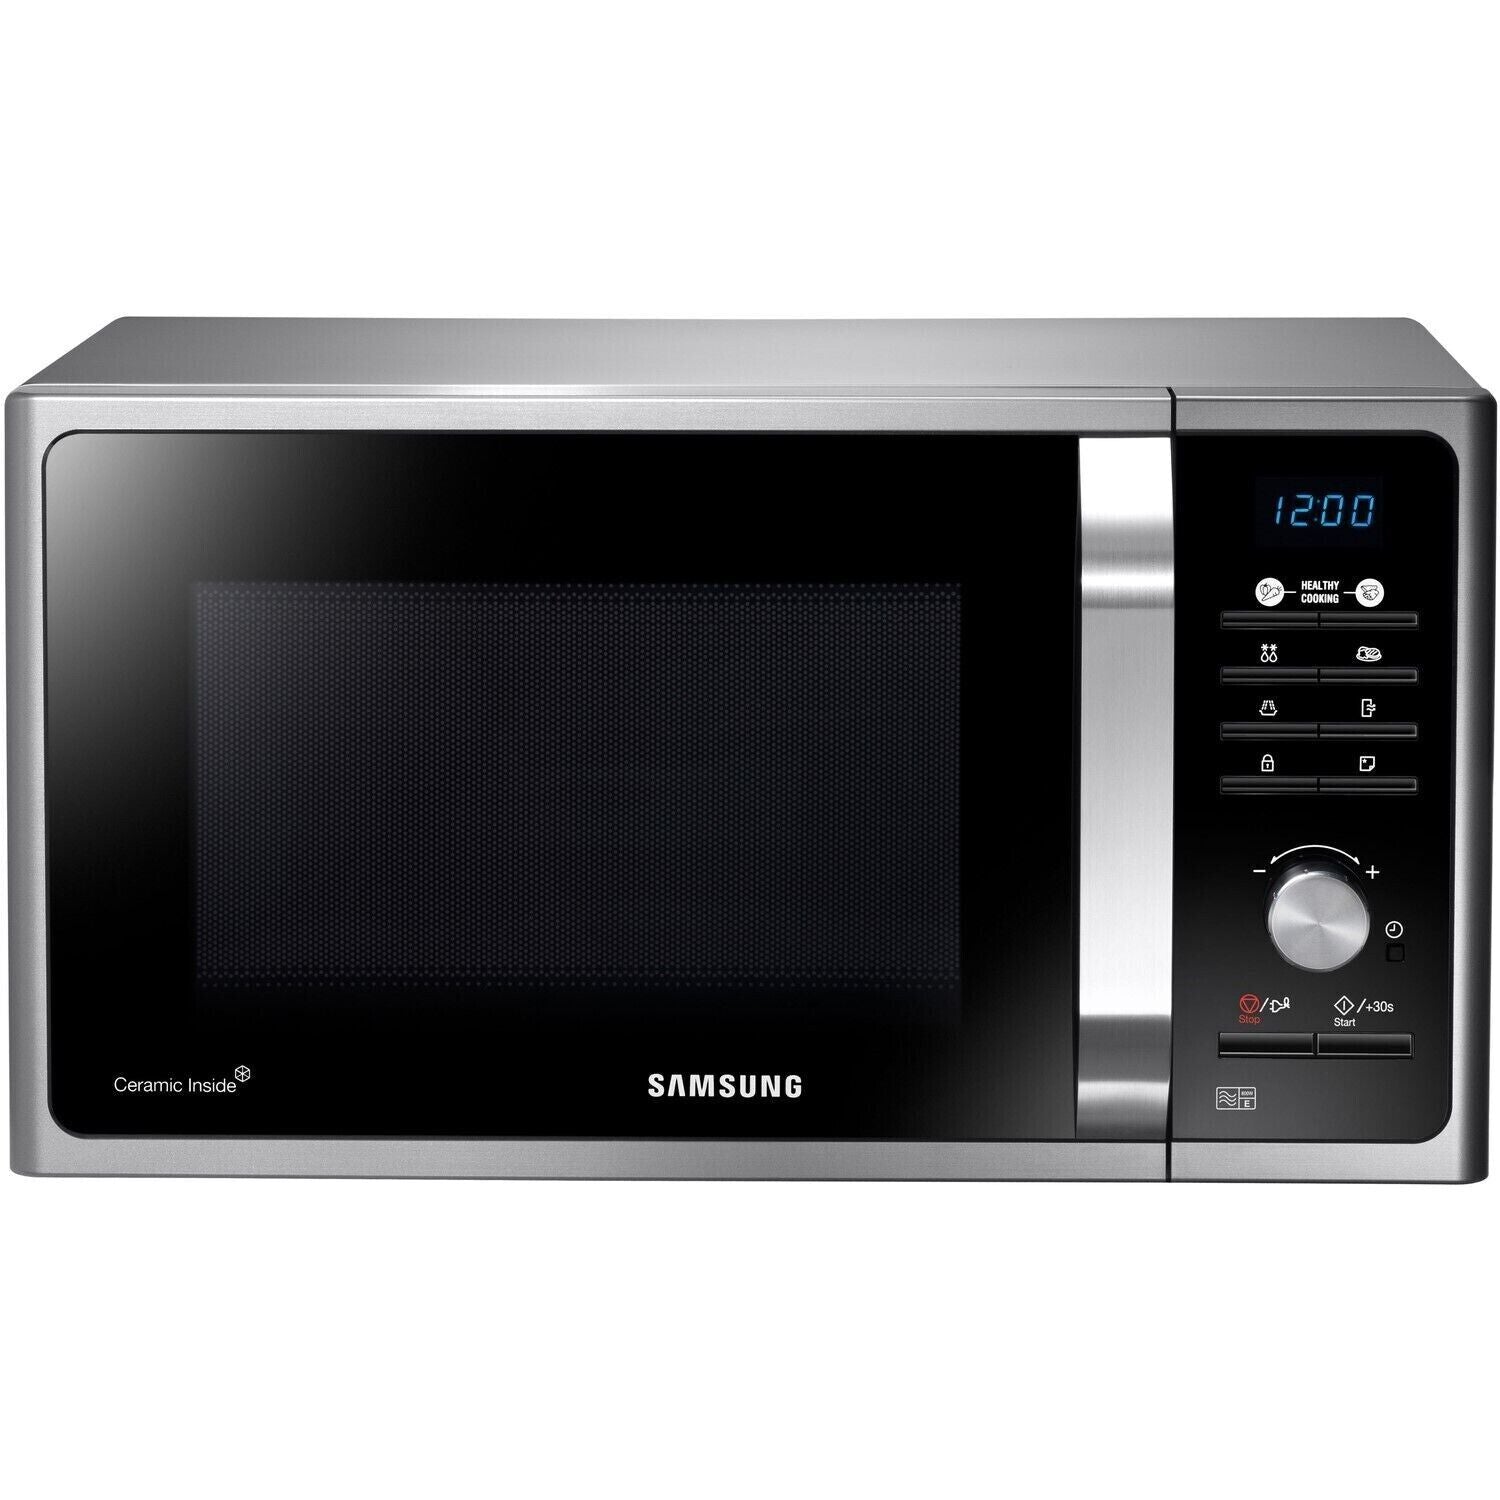 Samsung 23 Litre Solo Microwave - Silver MS23F301TAS